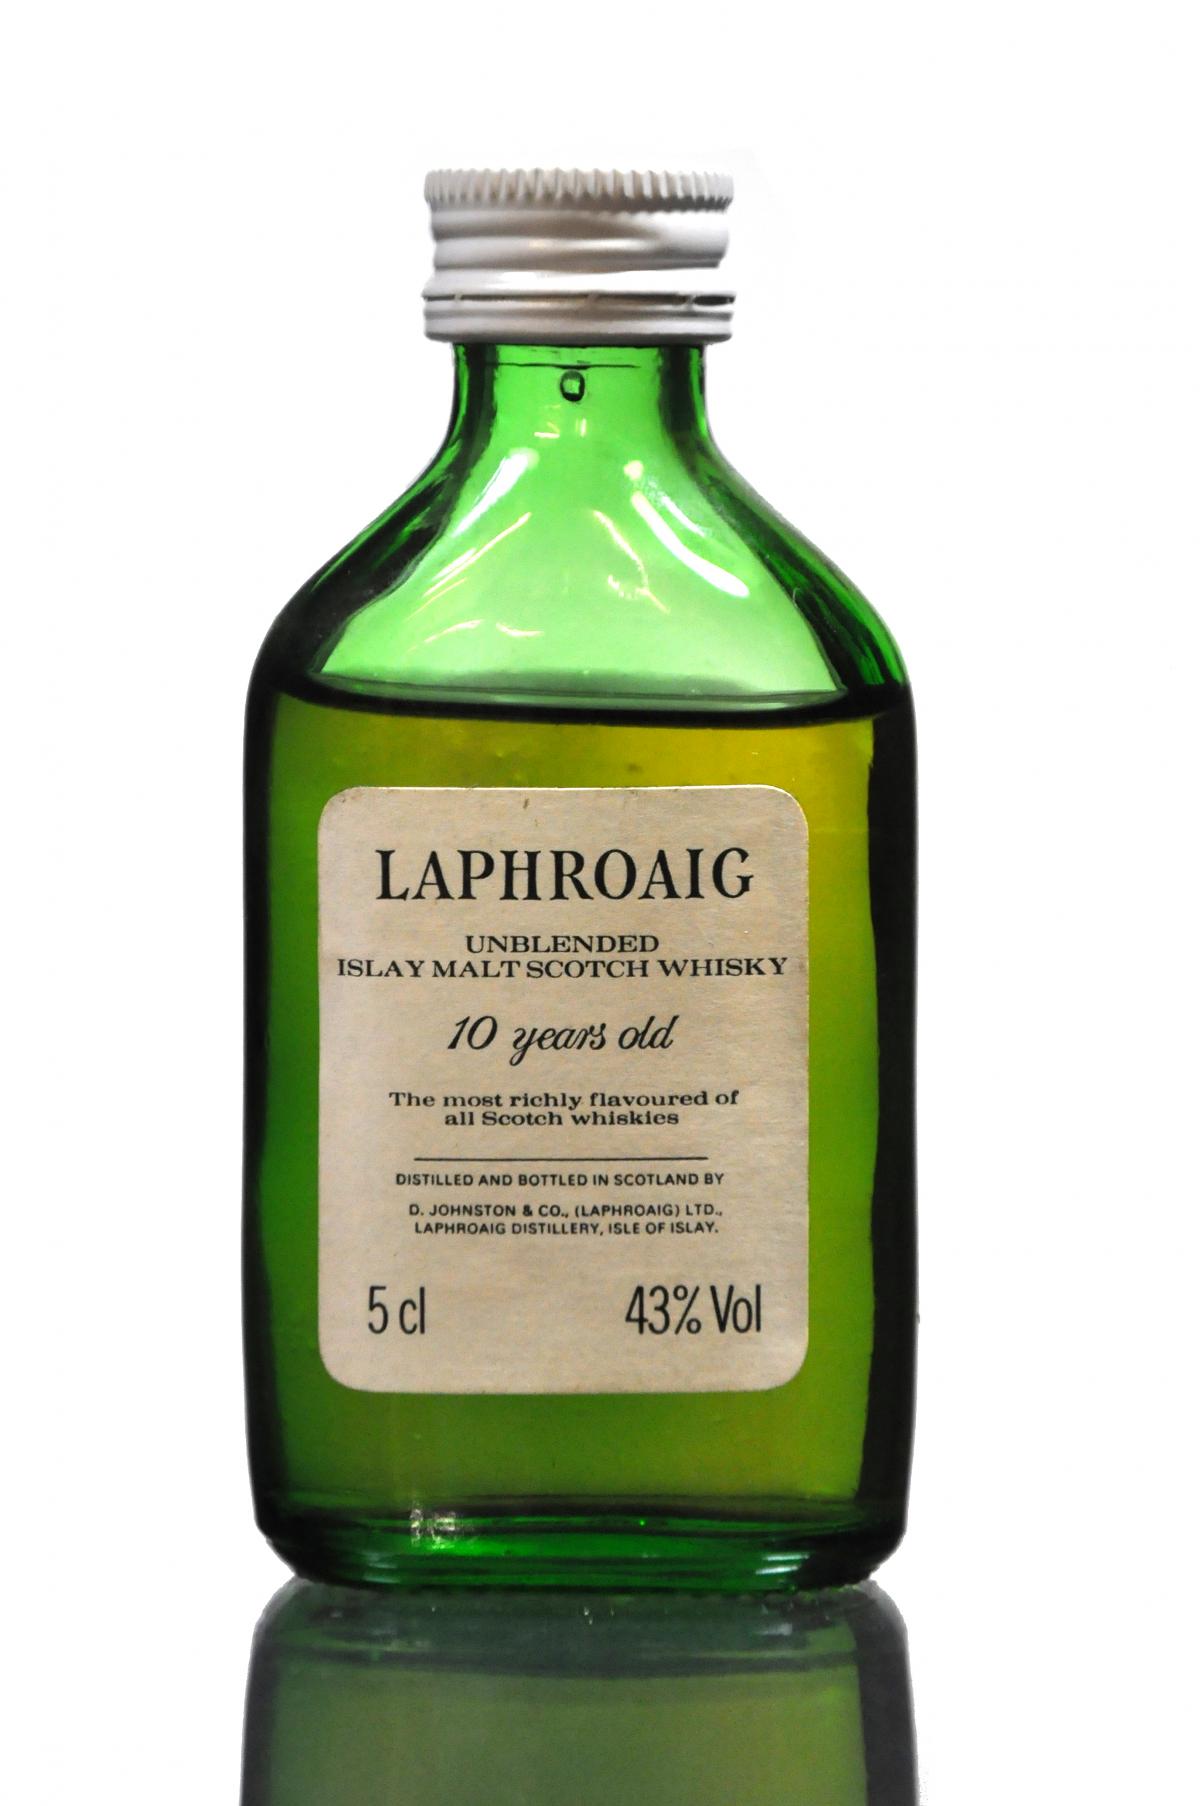 Laphroaig 10 Year Old Miniature